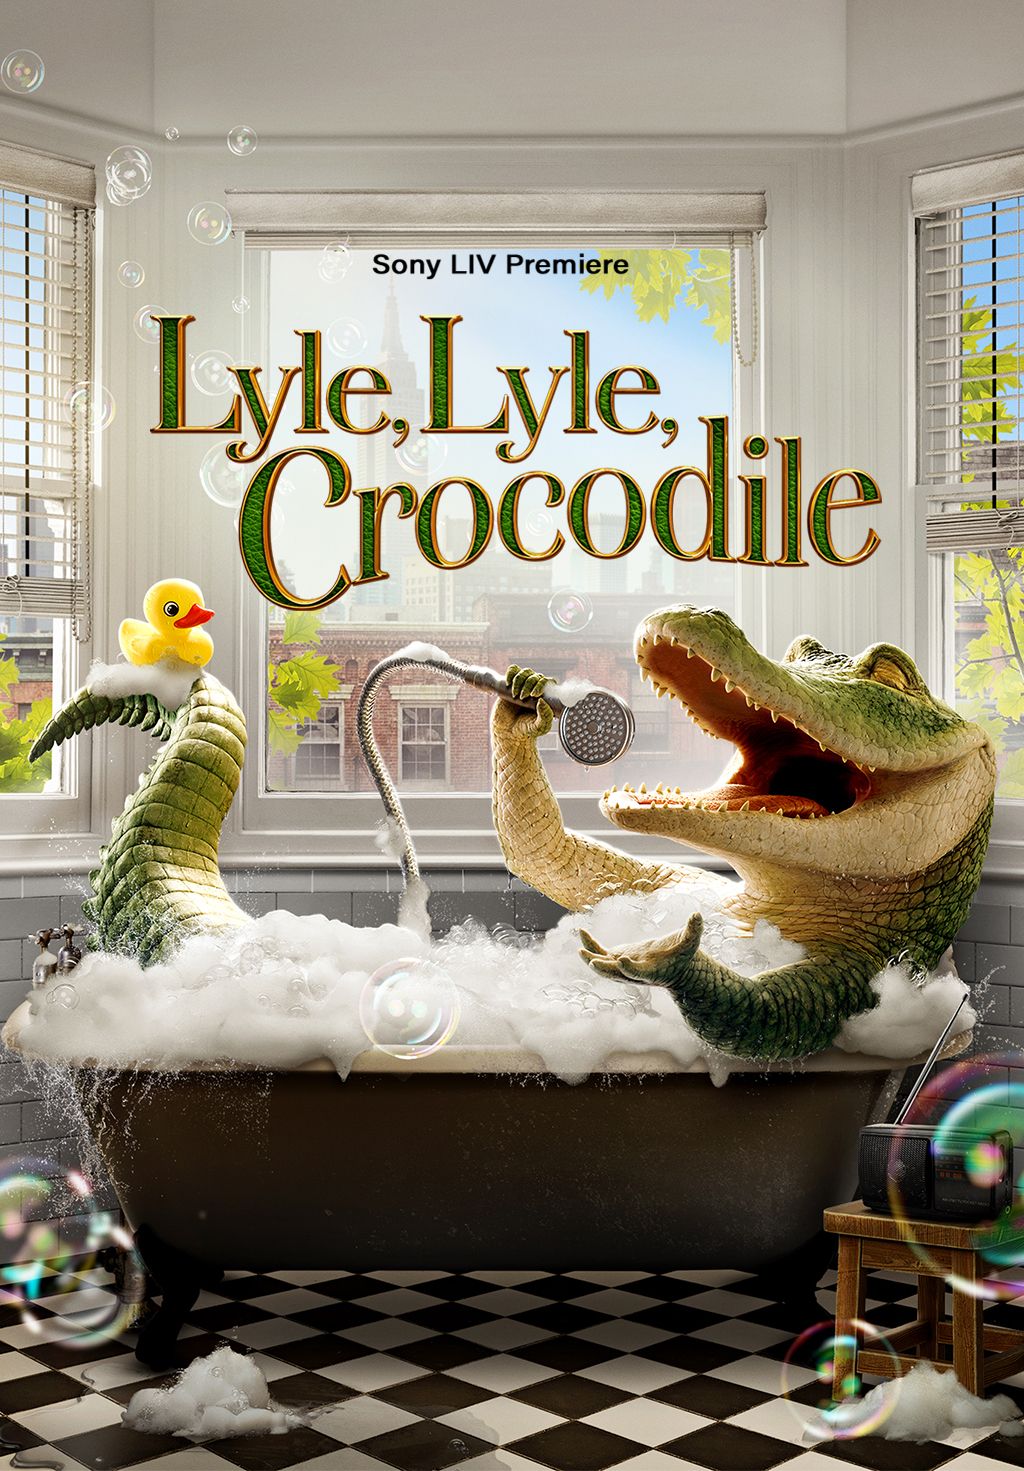 Lyle, Lyle, Crocodile